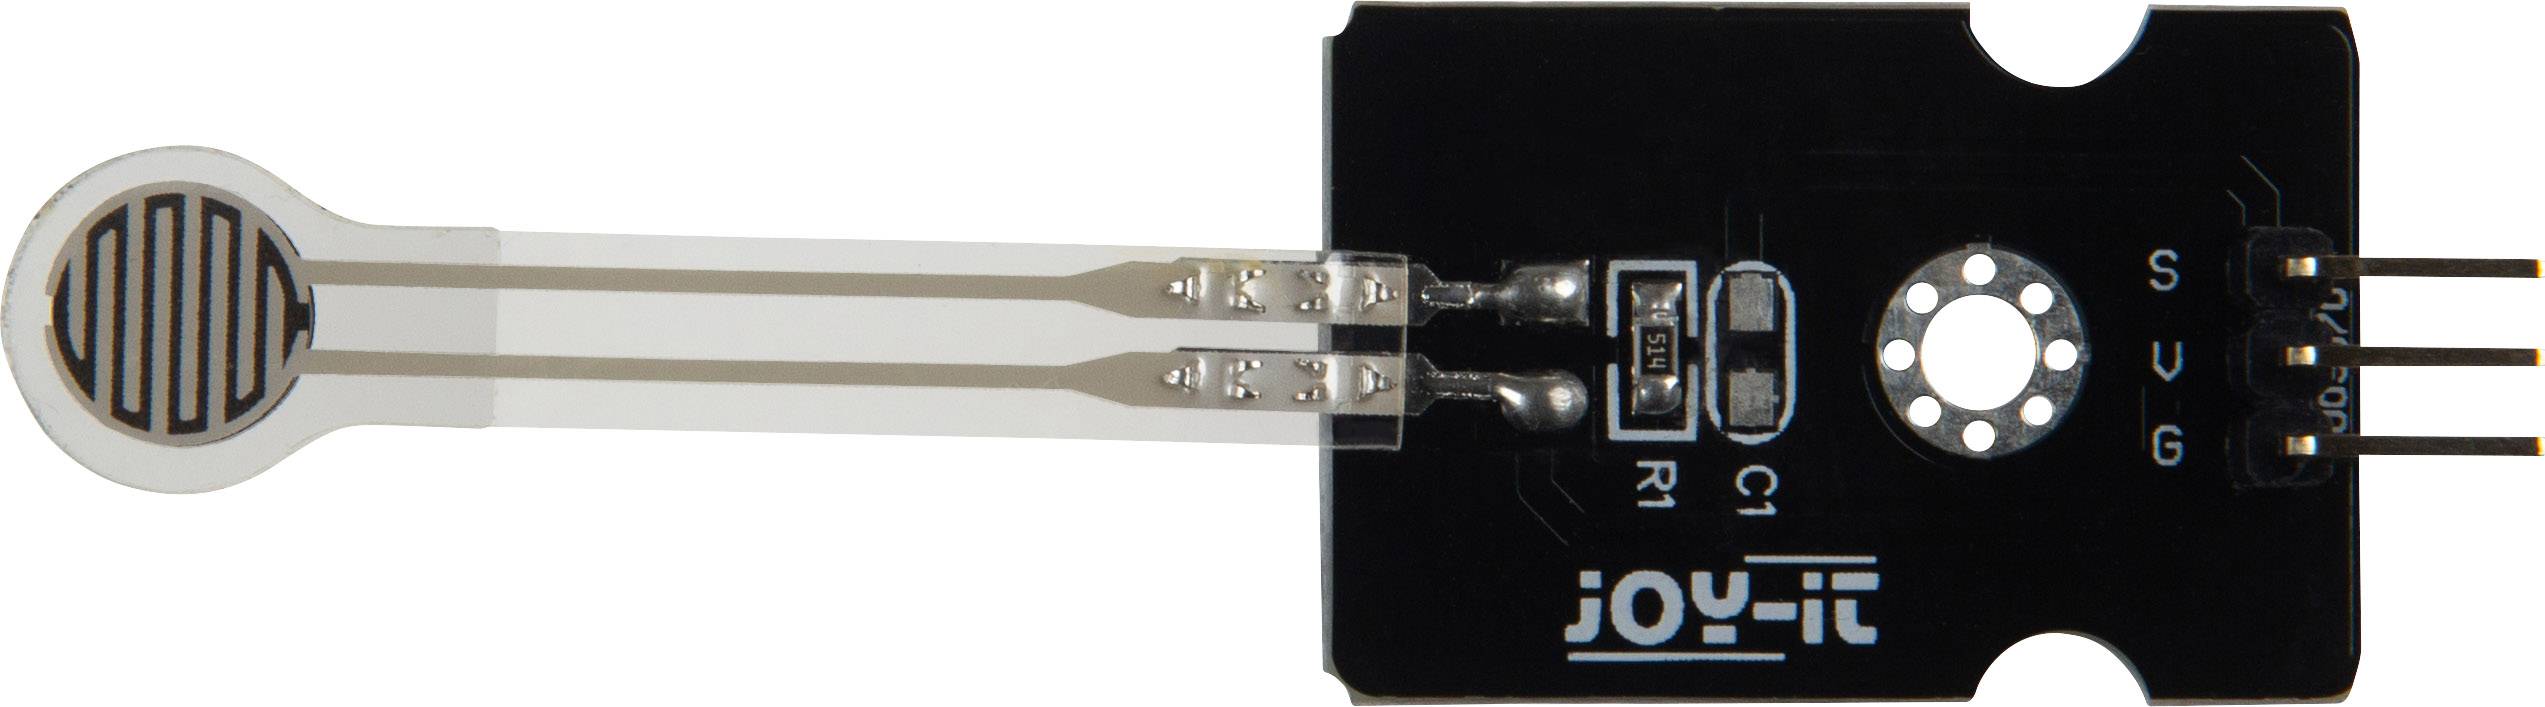 JOY-IT SEN-Pressure02 Berührungs-Sensor 1 St. Passend für: Arduino, micro:bit, Raspberry Pi